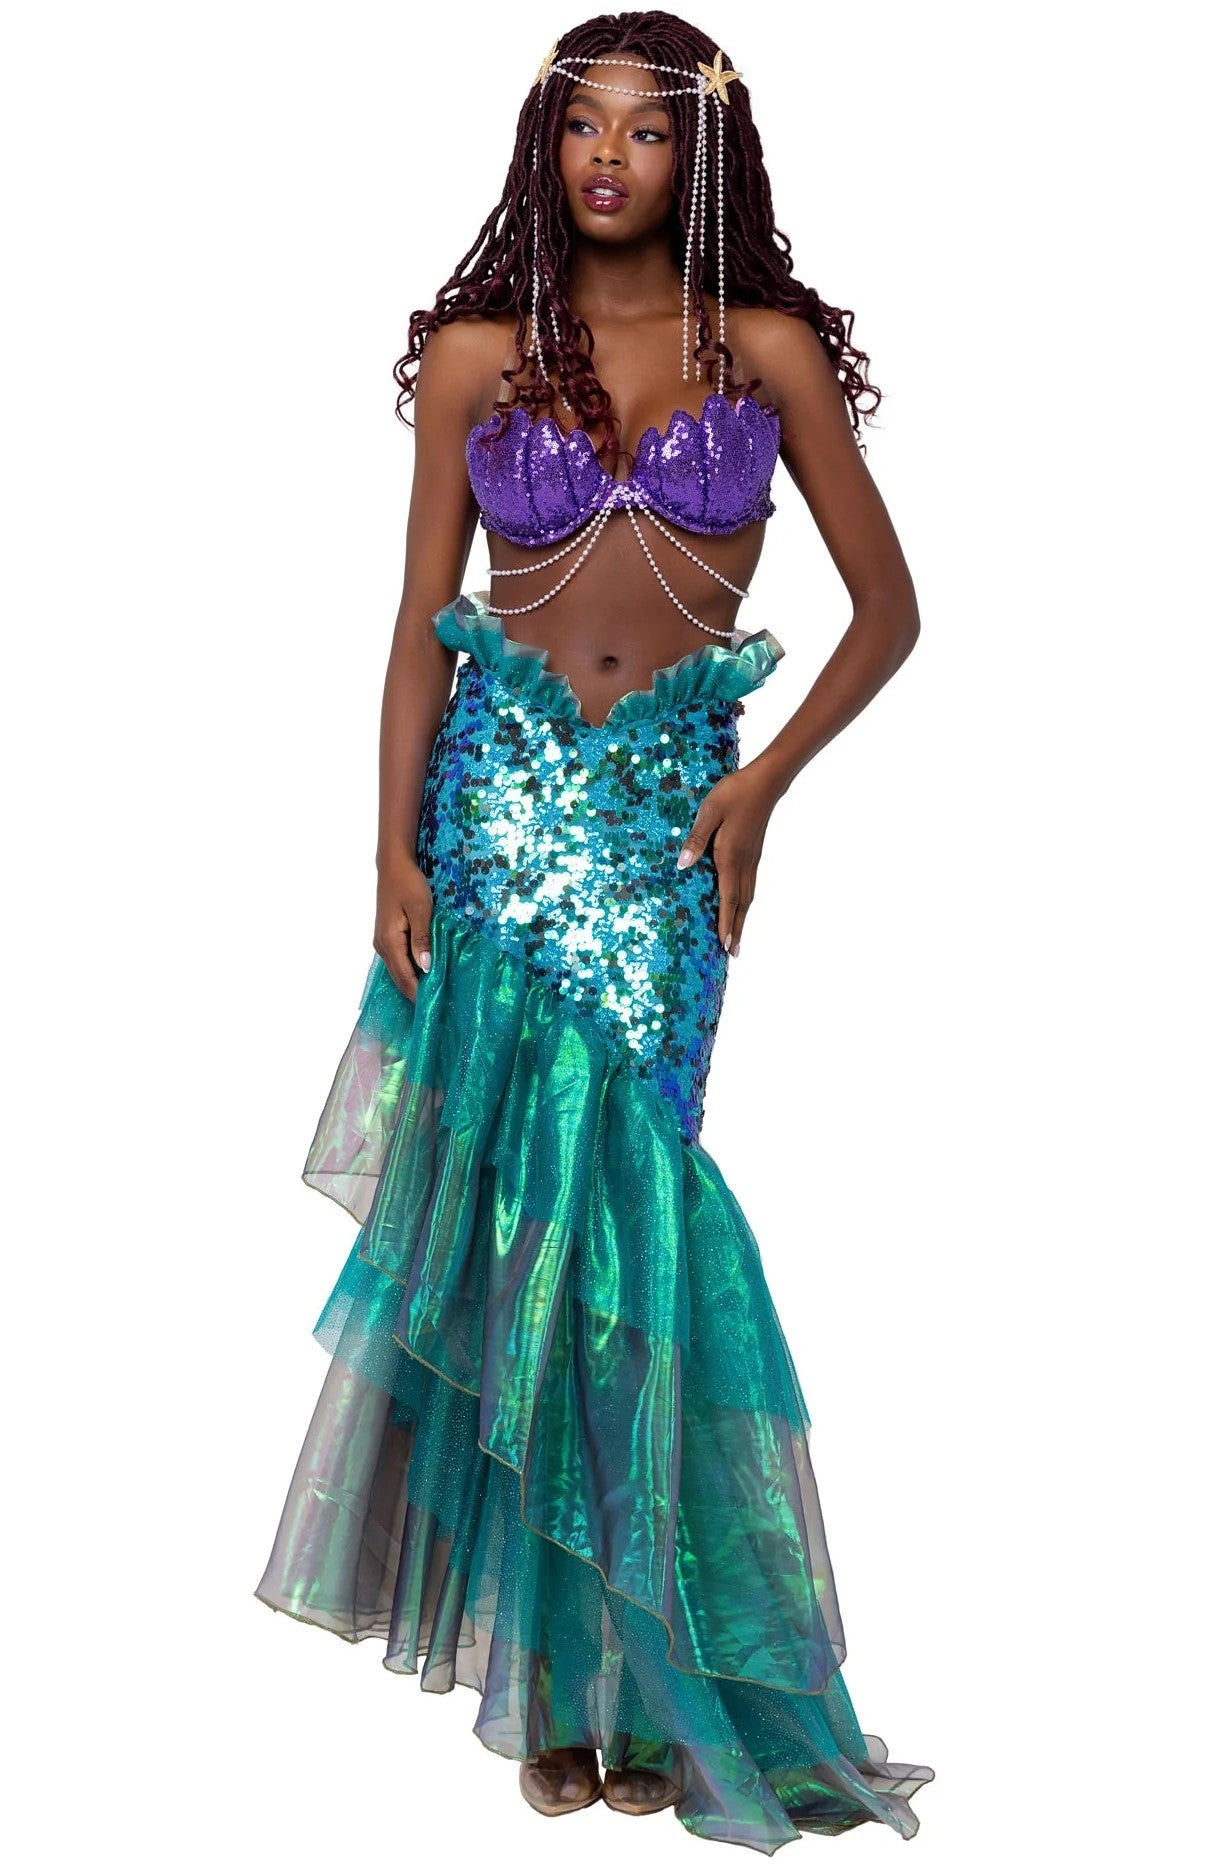 Mesmerizing Mermaid costume